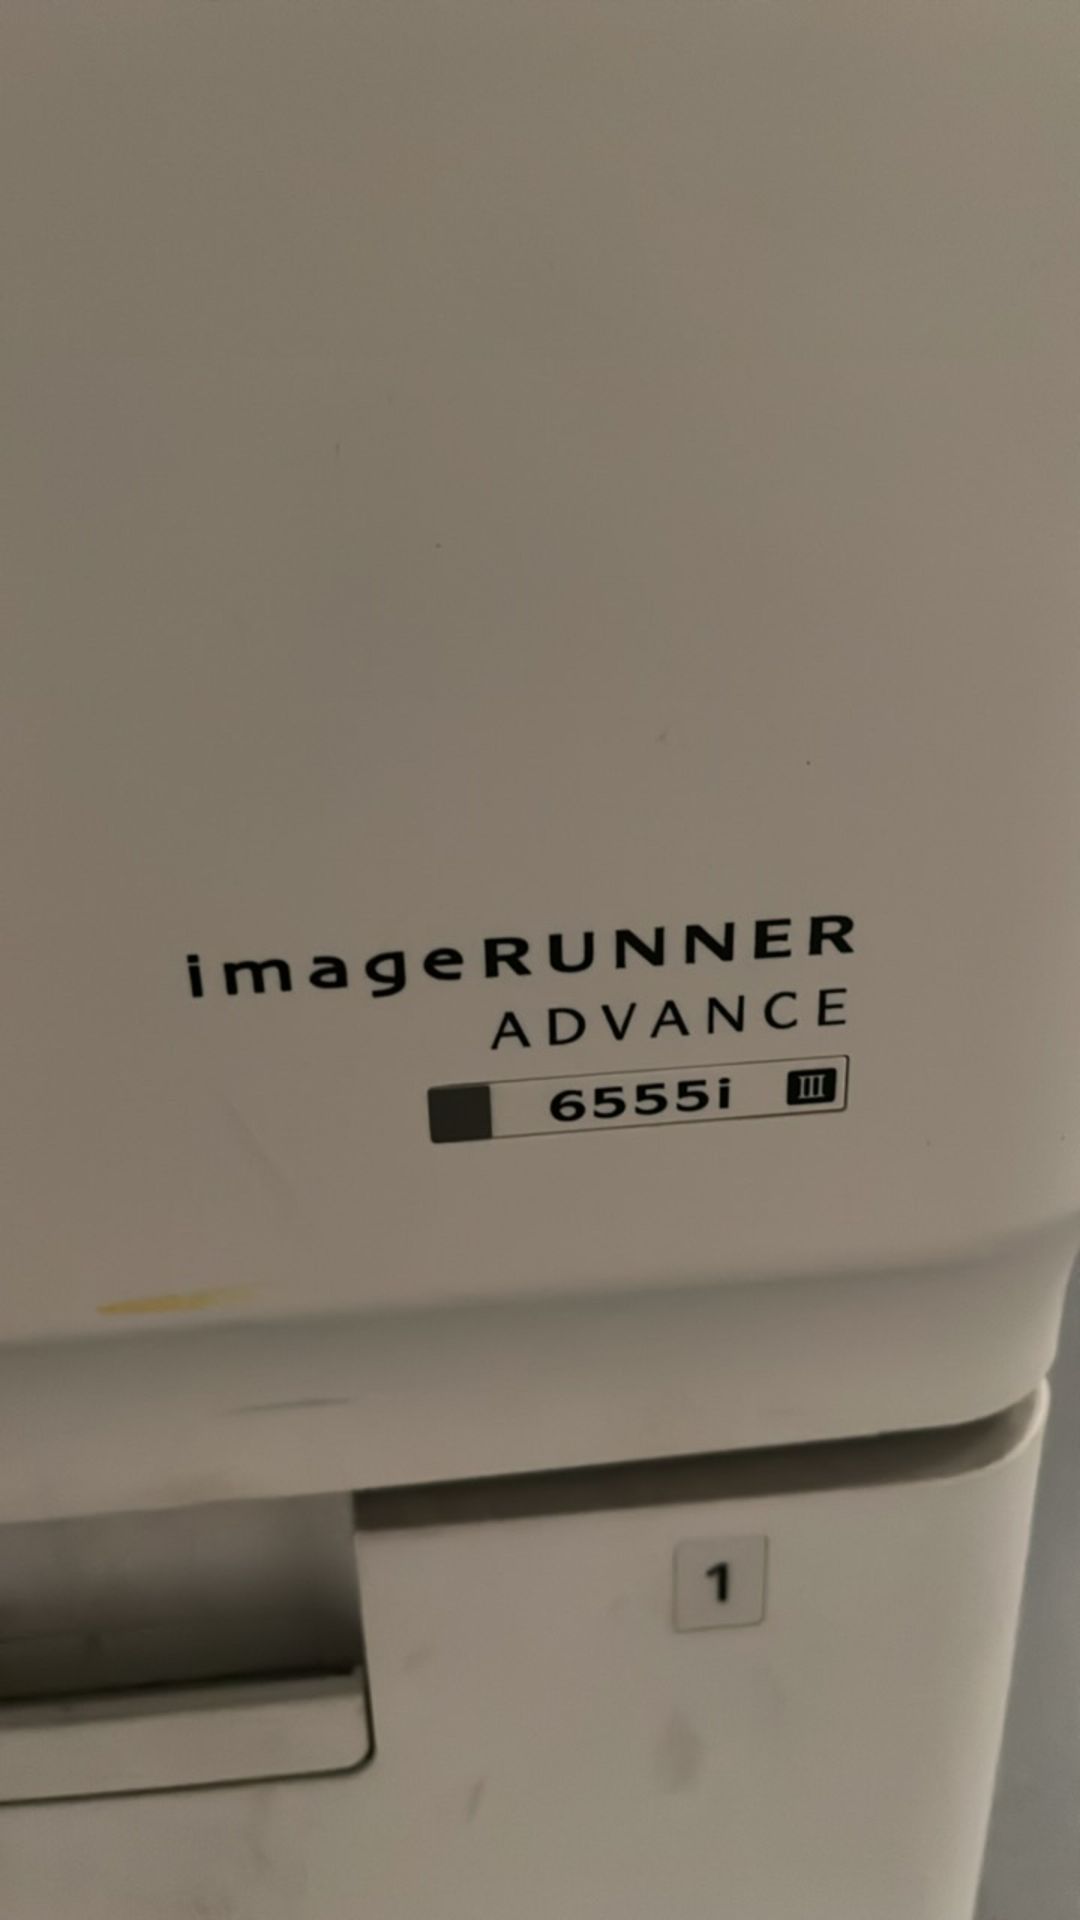 Cannon Image Runner Advance 6555i Printer - Image 2 of 7